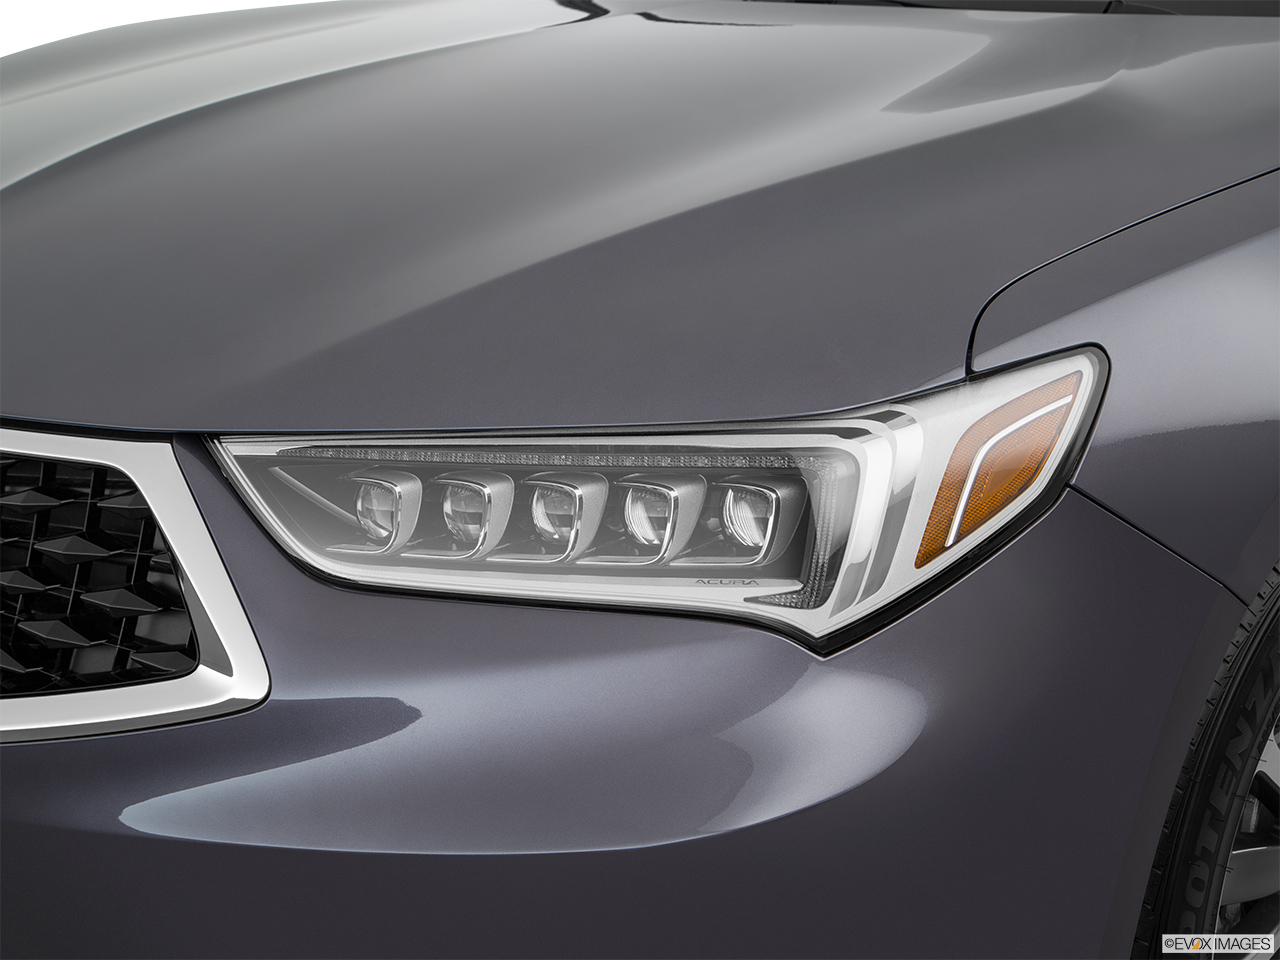 2018 Acura TLX 3.5L Drivers Side Headlight. 